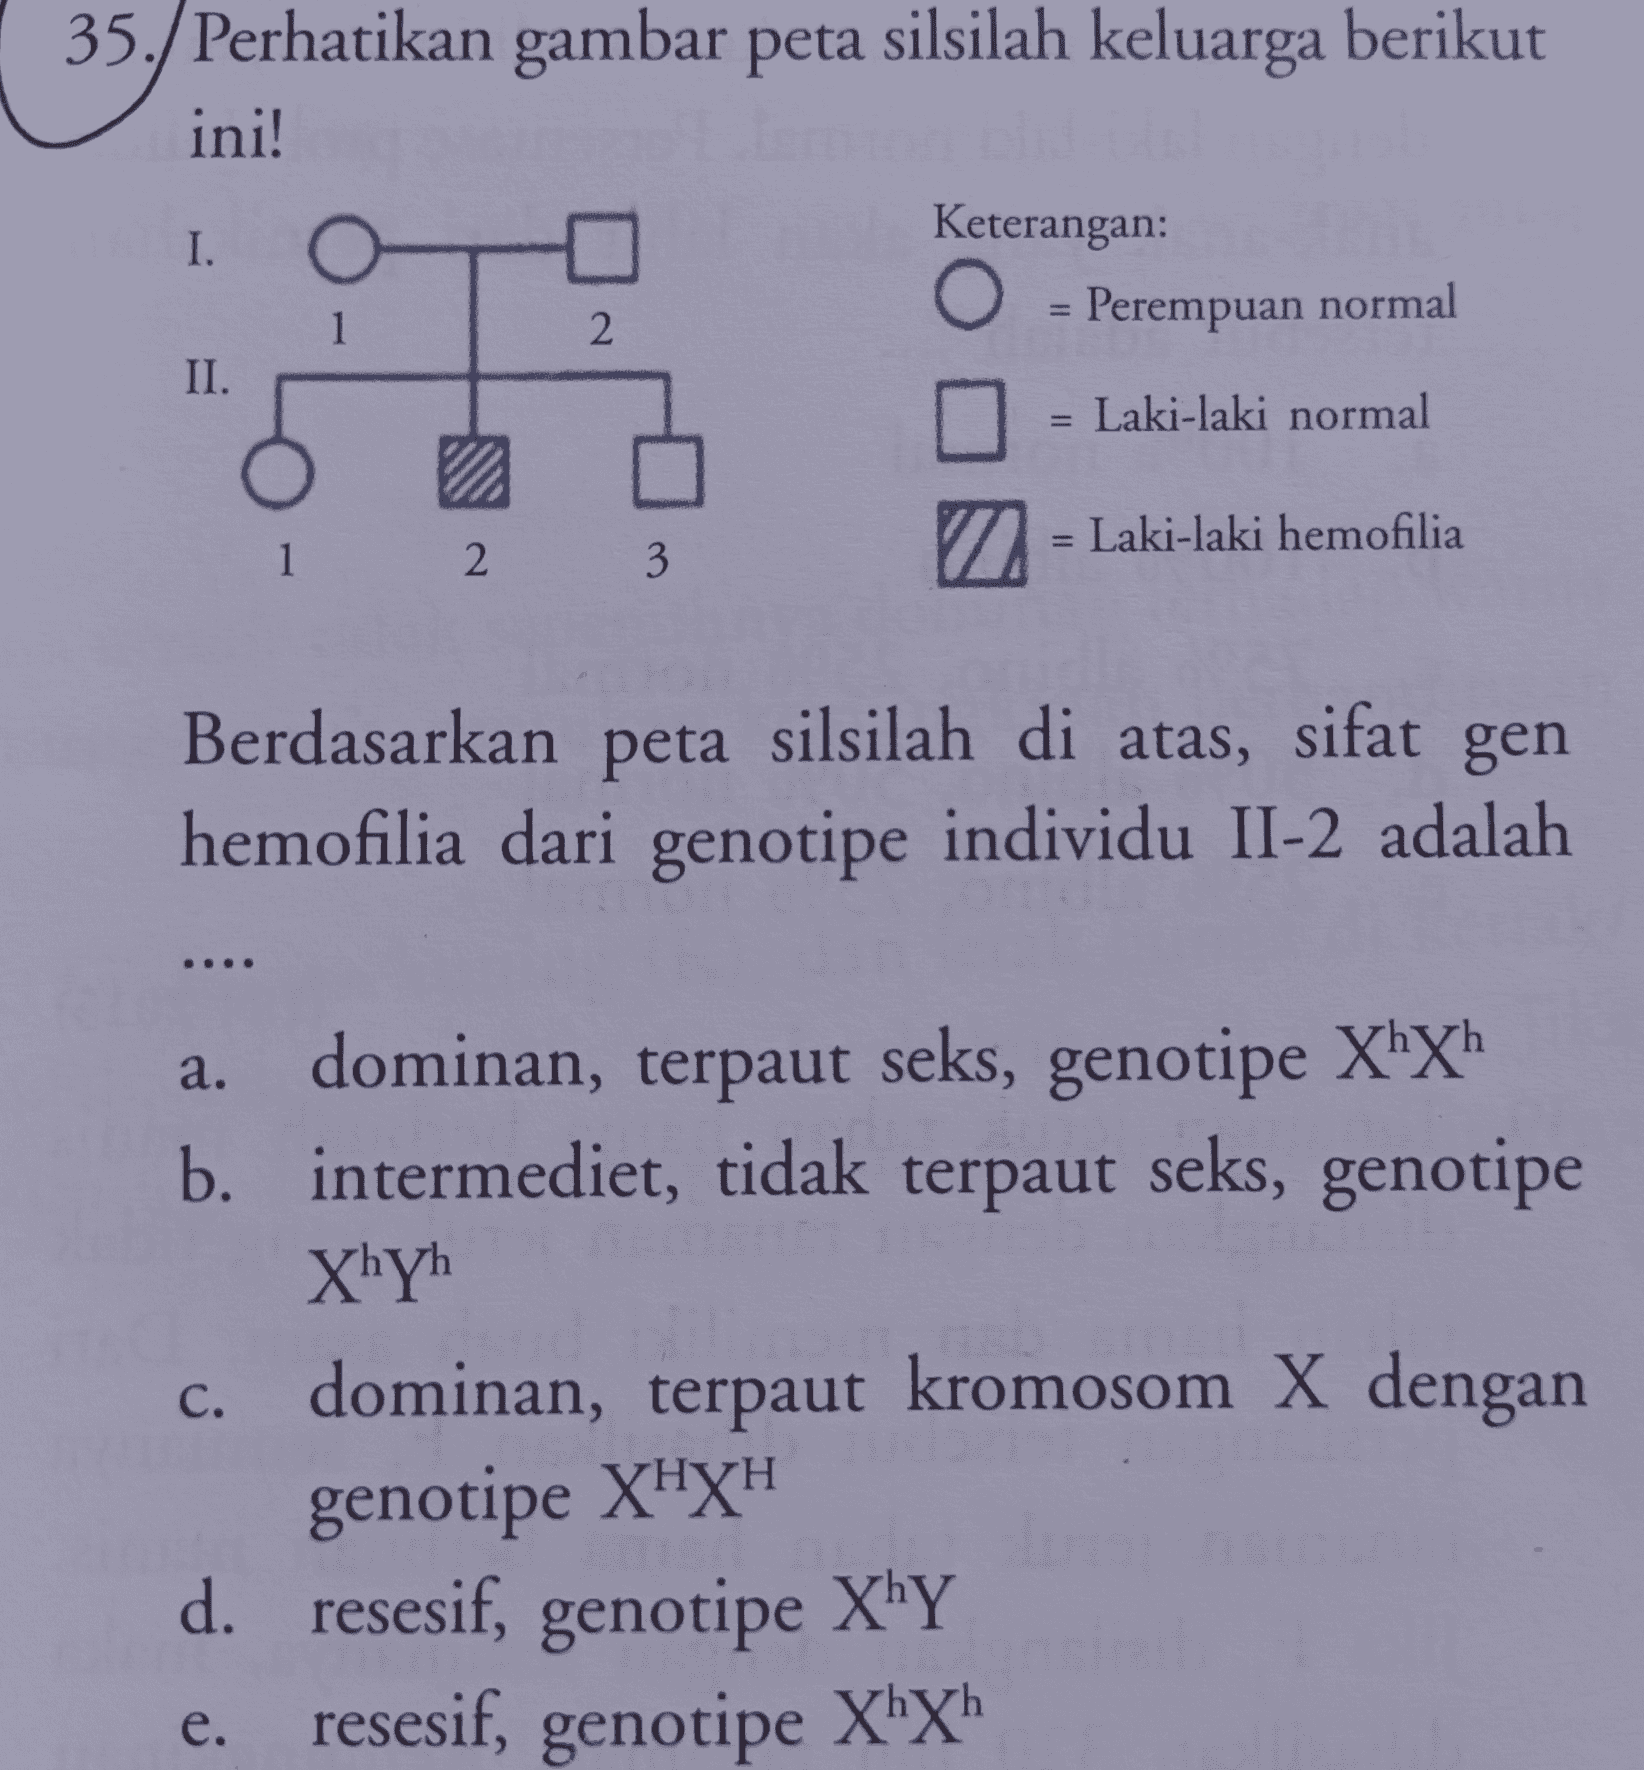 35. Perhatikan gambar peta silsilah keluarga berikut ini! O Keterangan: O = Perempuan normal I. = 1 2. II. = Laki-laki normal = Laki-laki hemofilia = 1 2 3 - - Berdasarkan peta silsilah di atas, sifat gen hemofilia dari genotipe individu II-2 adalah a. dominan, terpaut seks, genotipe XhXh b. intermediet, tidak terpaut seks, genotipe Xhyh dominan, terpaut kromosom X dengan genotipe XHXH d. resesif, genotipe XhY resesif, genotipe XhXh C. e. 